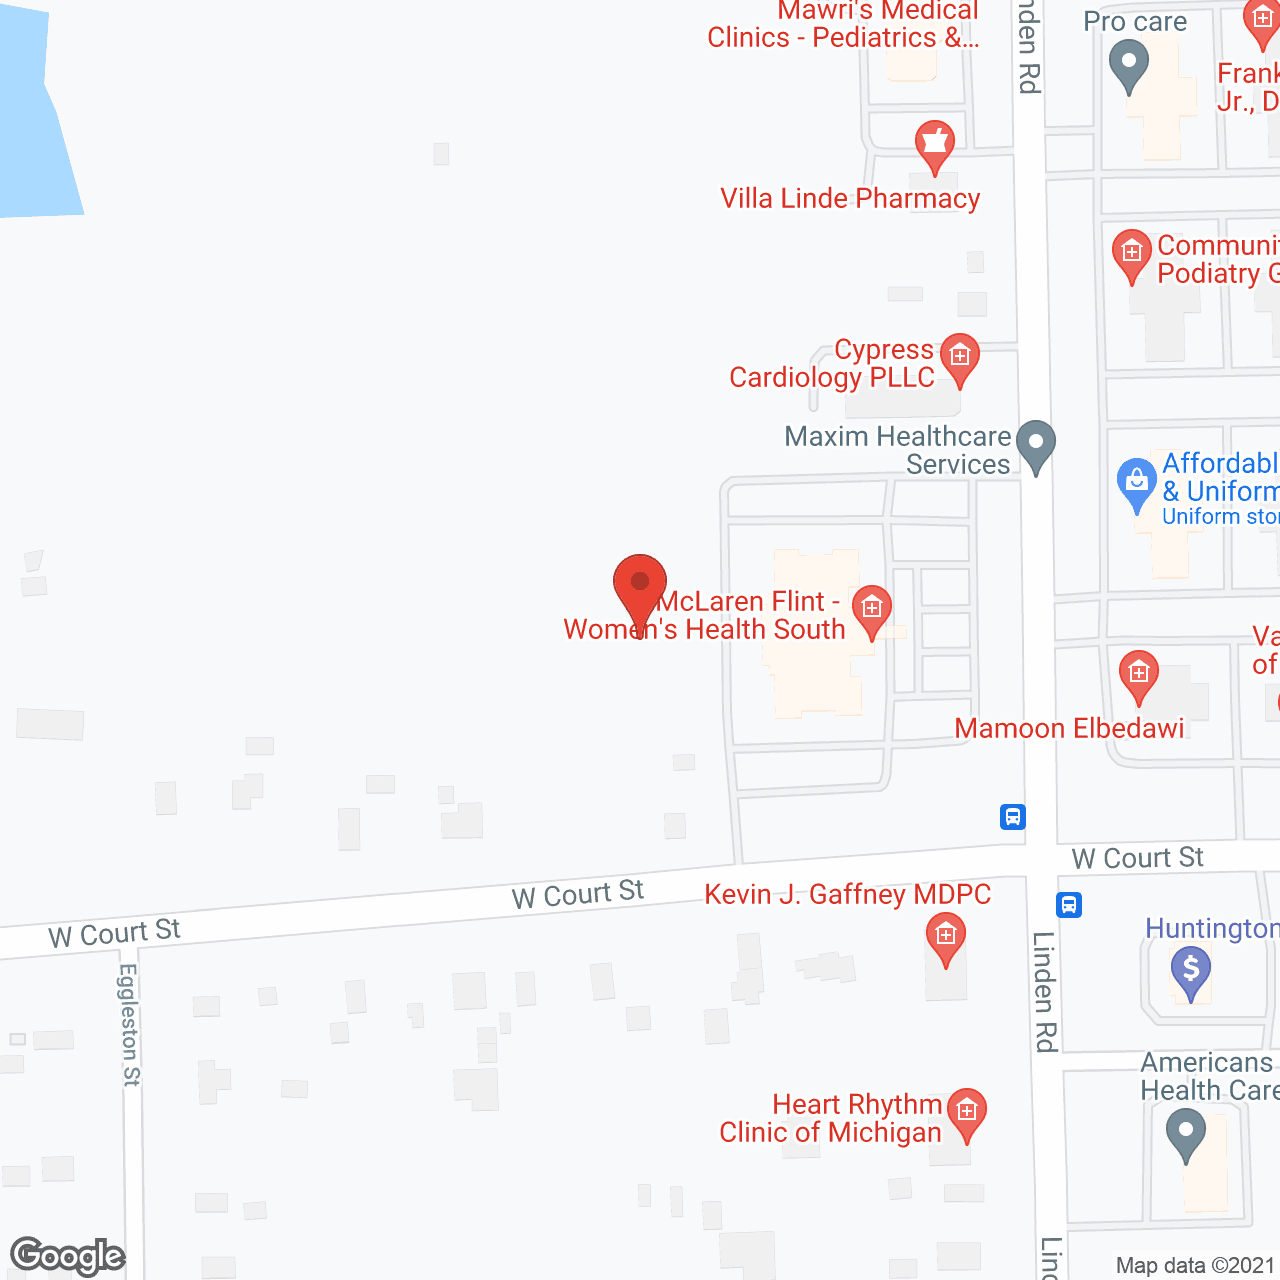 Laurel Heights AFC, LLC in google map